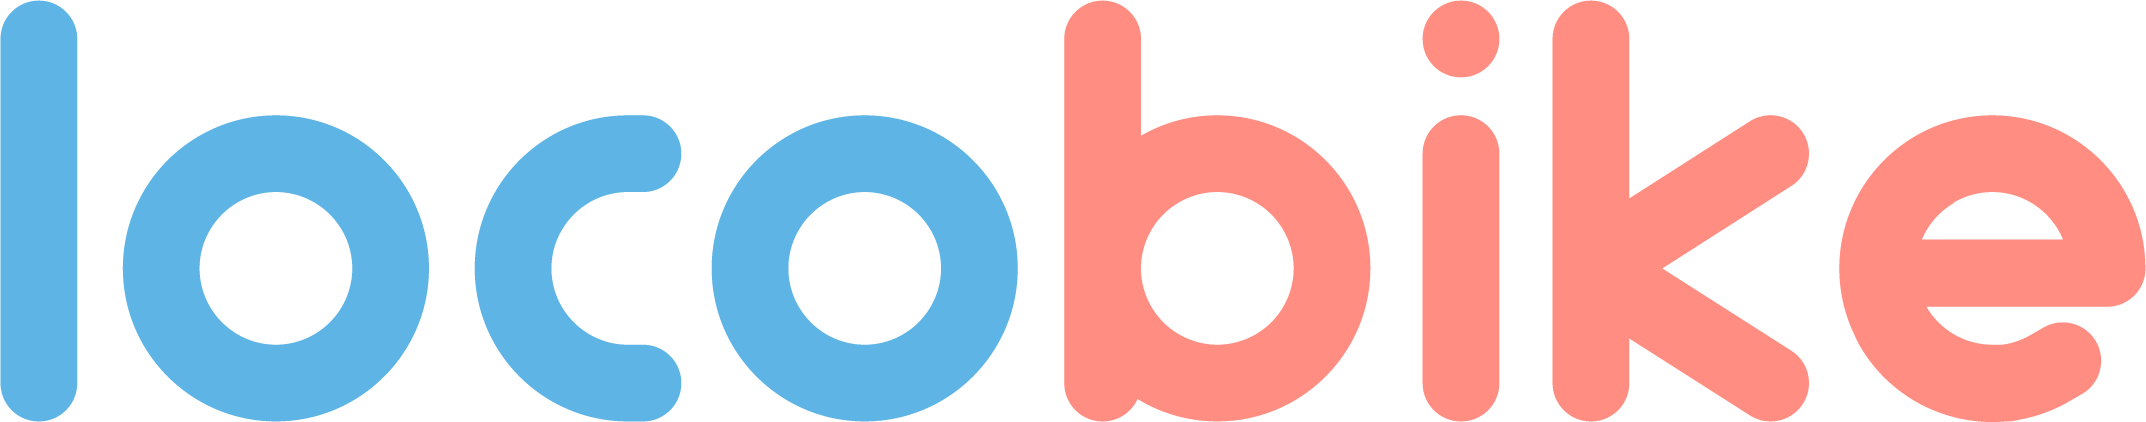 locobike_logo